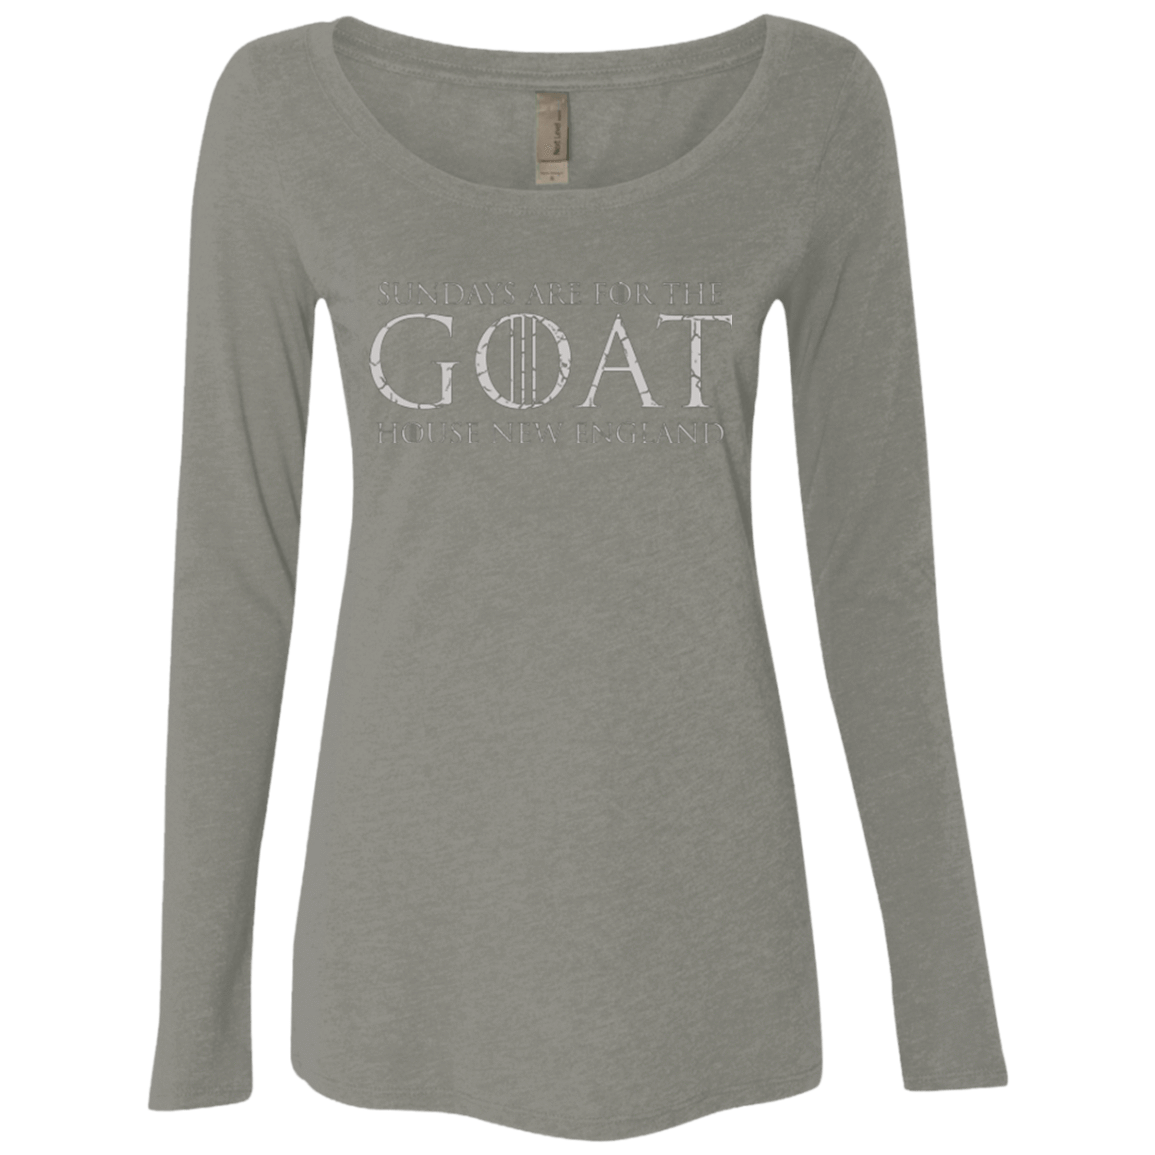 T-Shirts Venetian Grey / Small GOAT Women's Triblend Long Sleeve Shirt